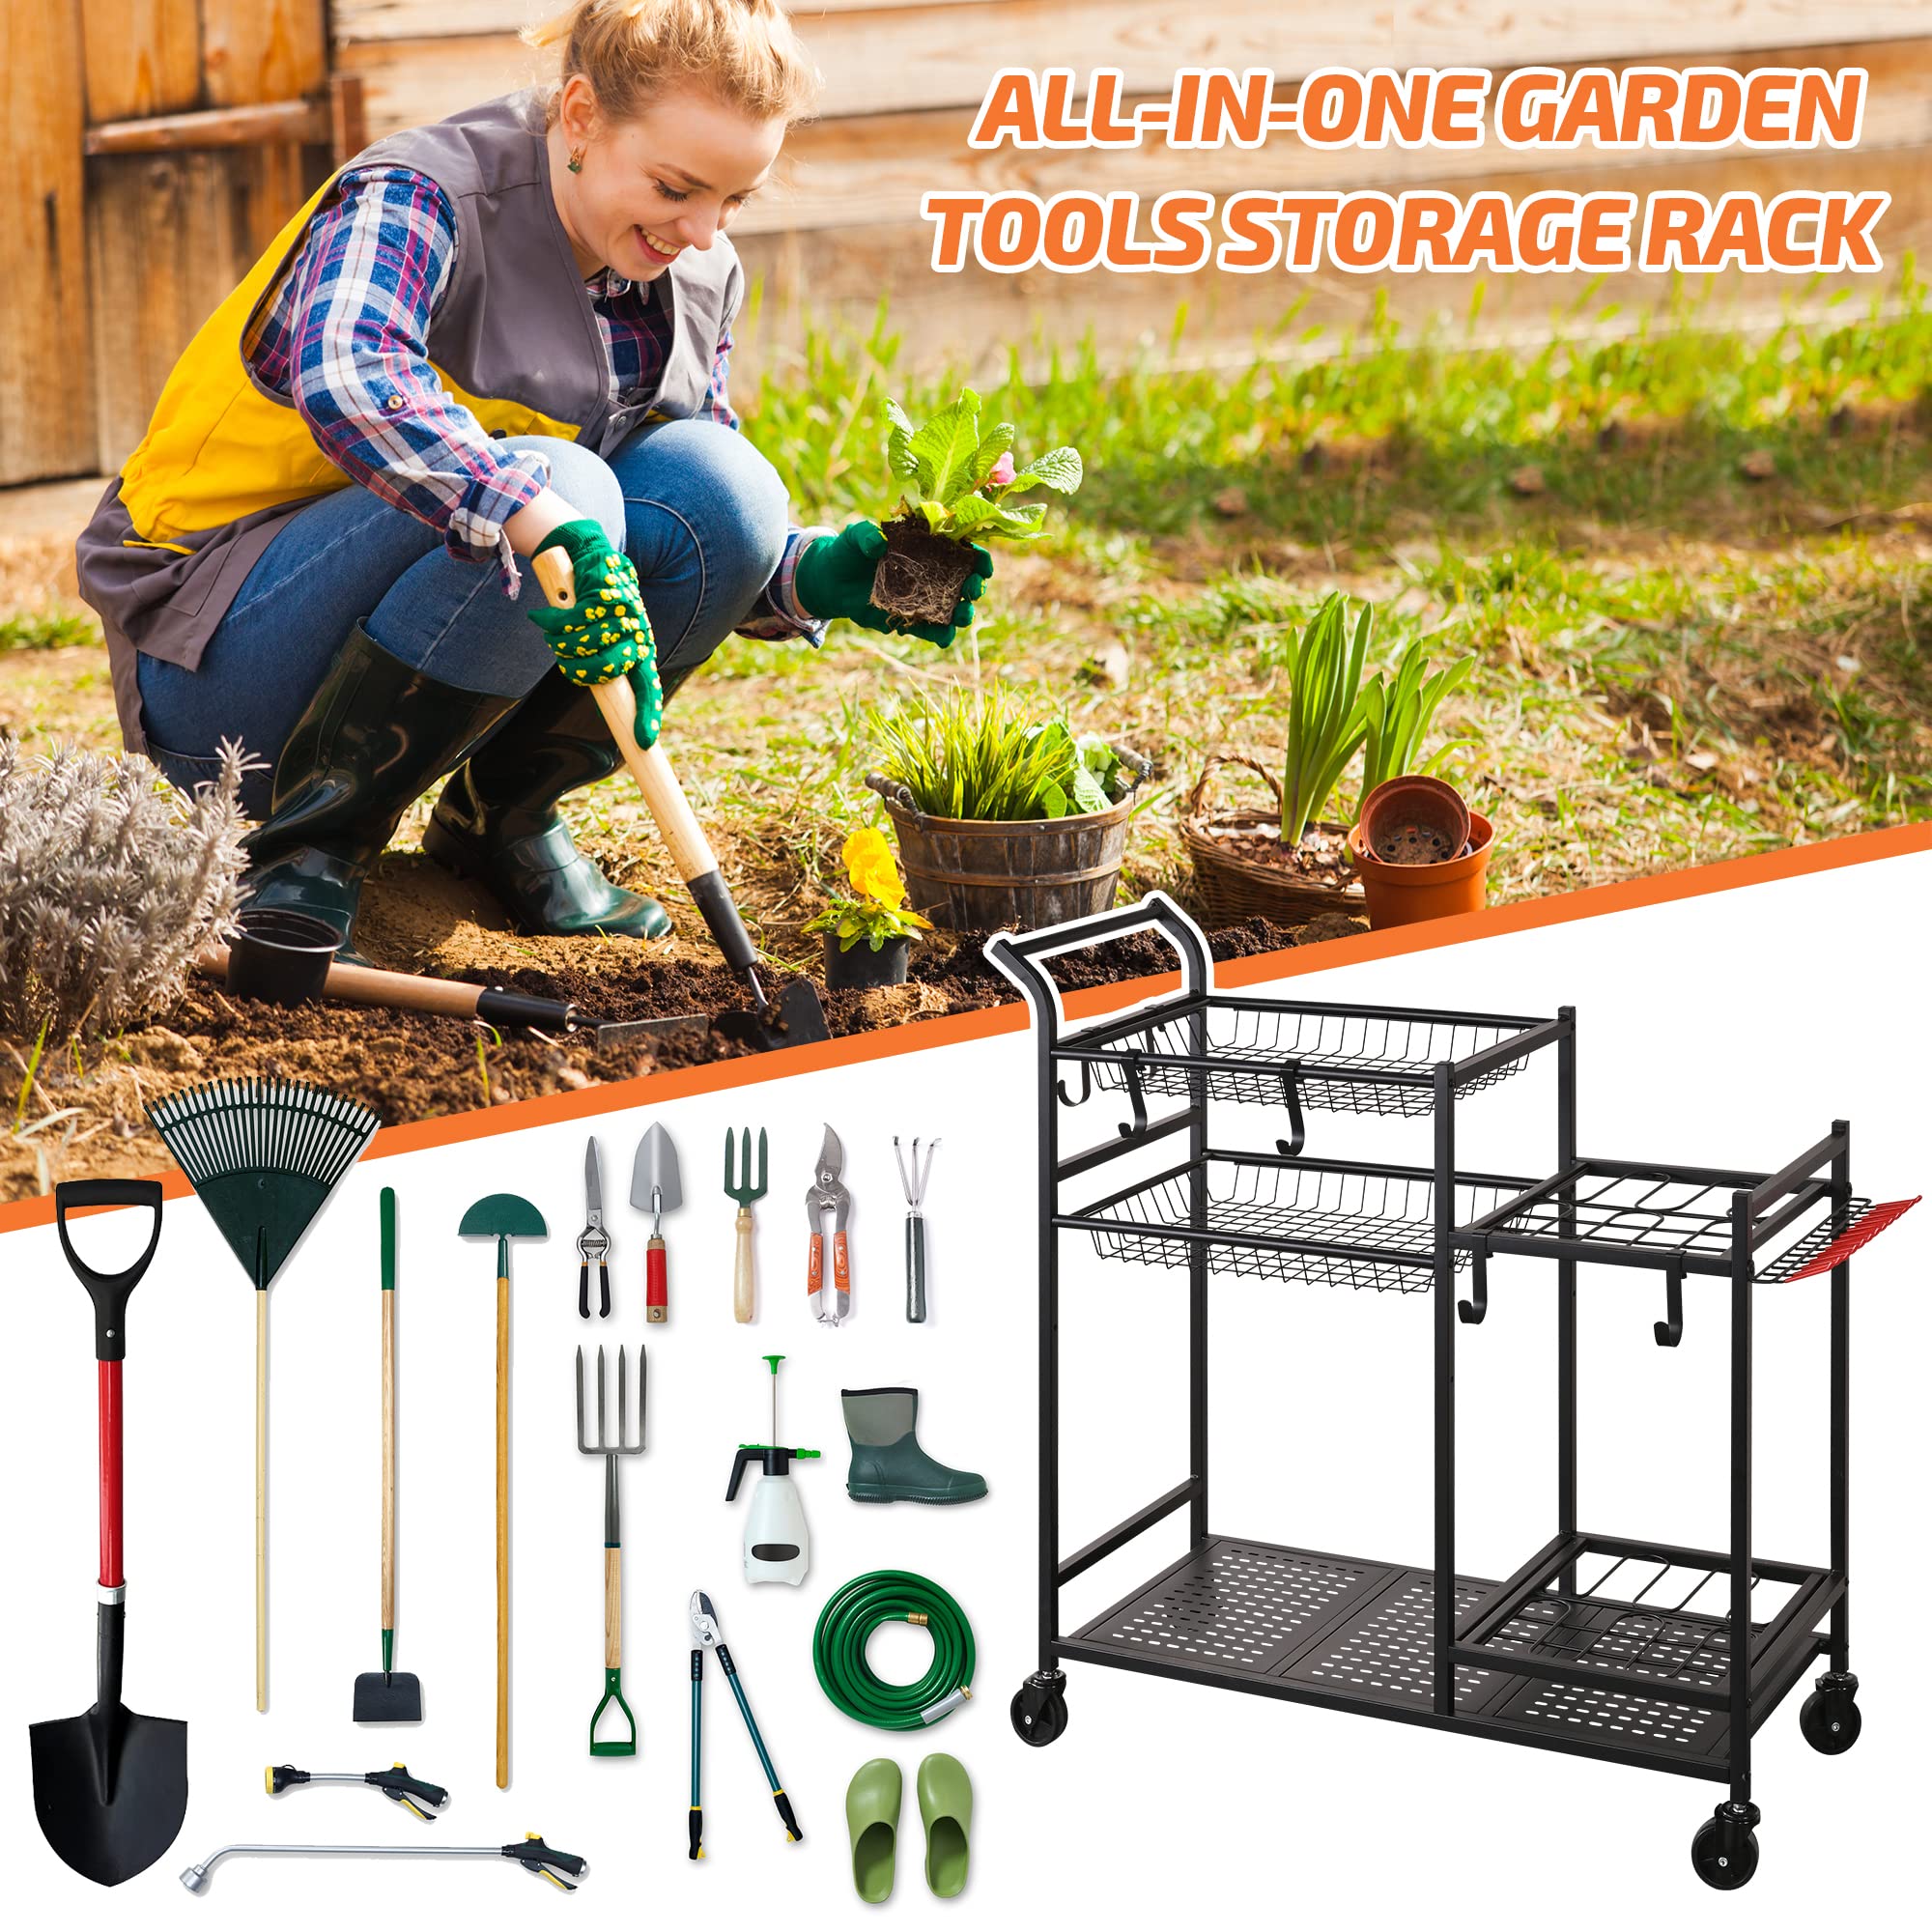 PLKOW Garden Tool Organizer with Wheels, Garden Tool Rack, Yard Tool Holder for Rakes, Shovel, Fertilizer, Garden Tool Storage for Garage, Shed, Outdoor